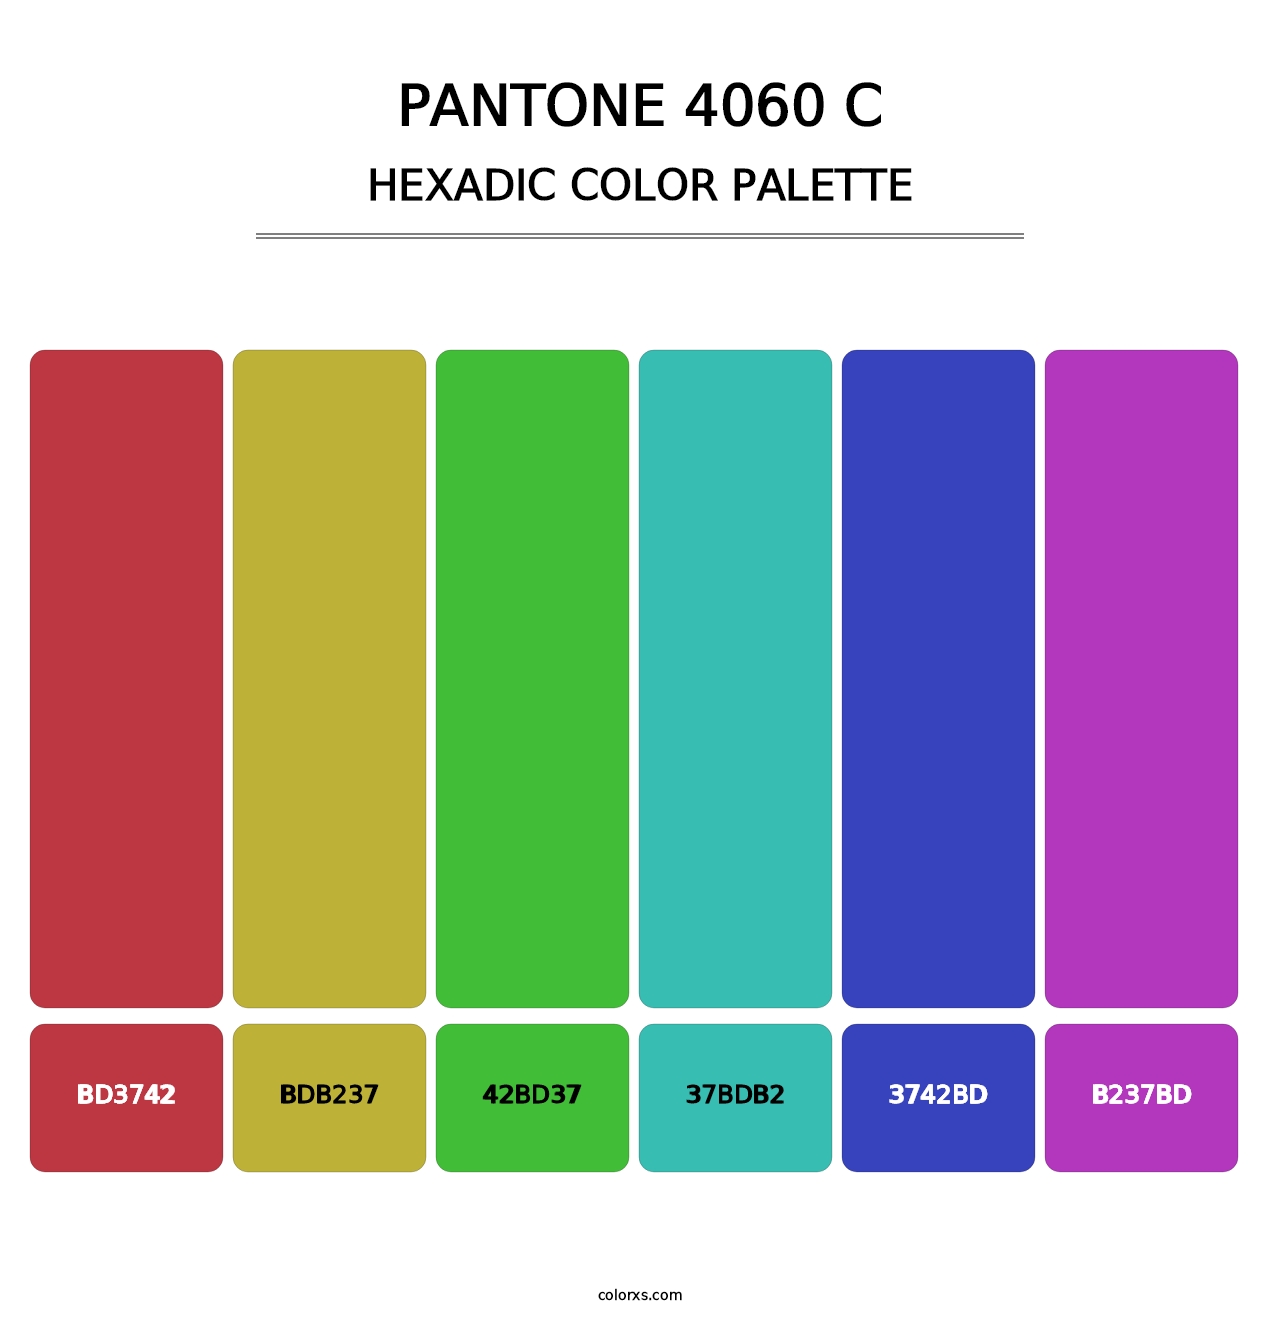 PANTONE 4060 C - Hexadic Color Palette